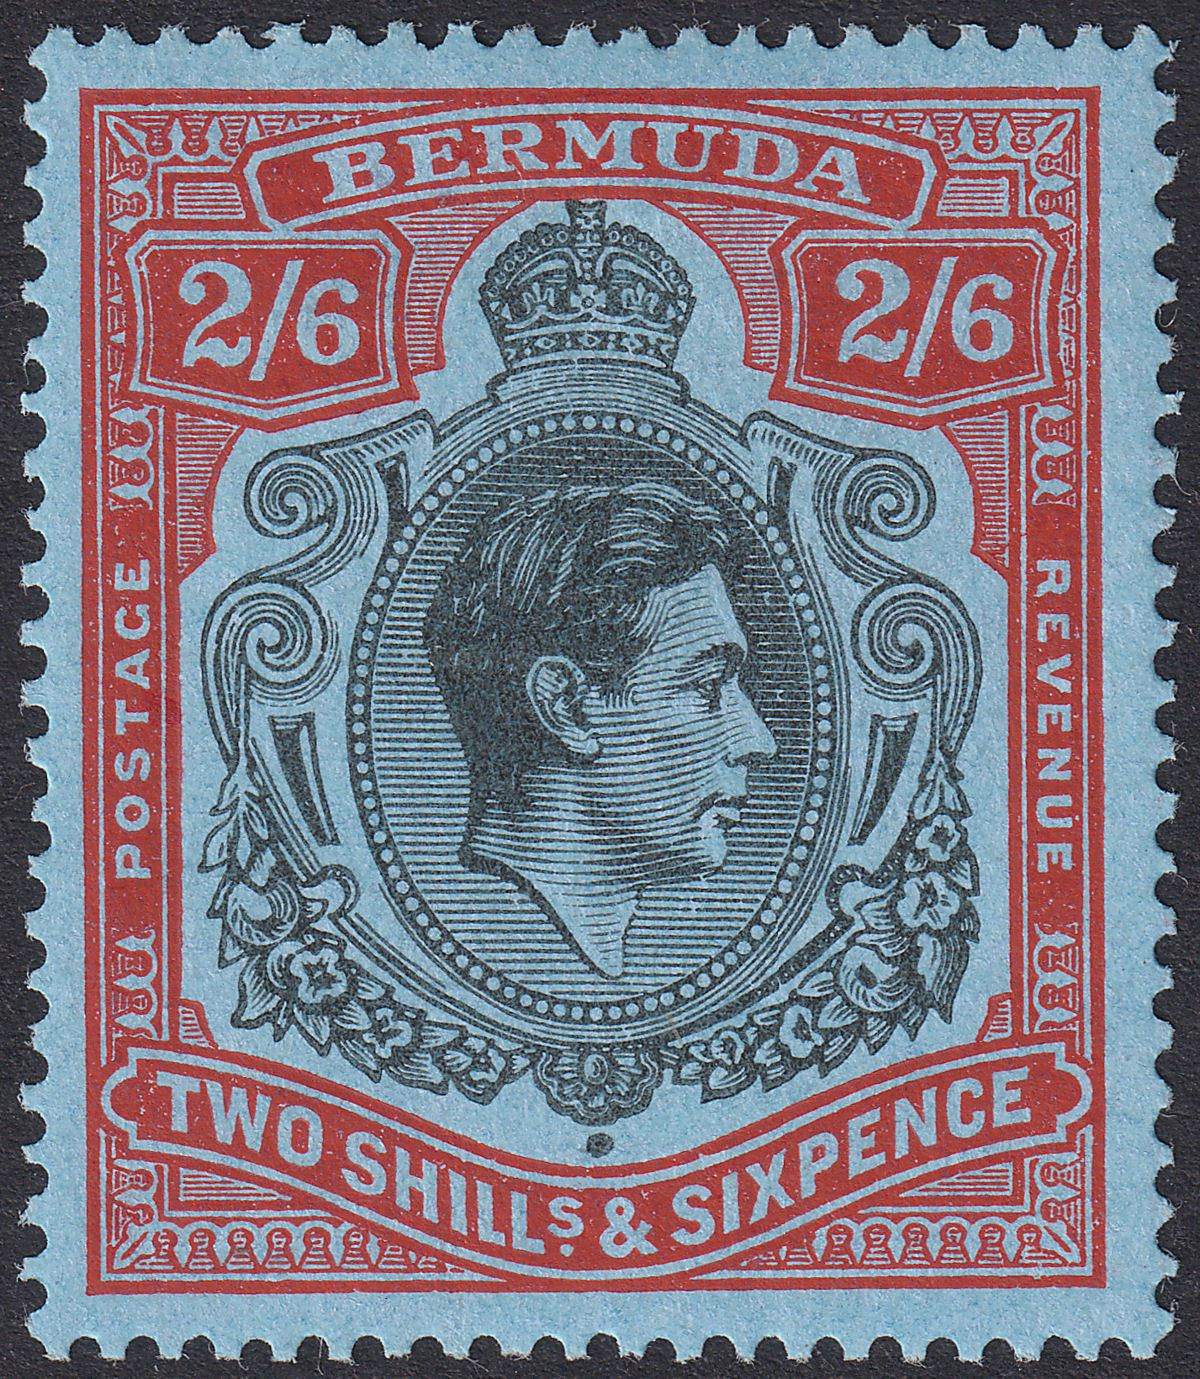 Bermuda 1941 KGVI 2sh6d Black and Carmine-Red on Pale Blue p14 Mint SG117b